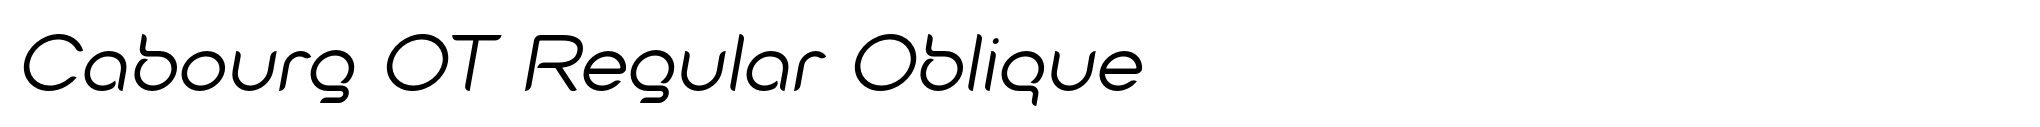 Cabourg OT Regular Oblique image